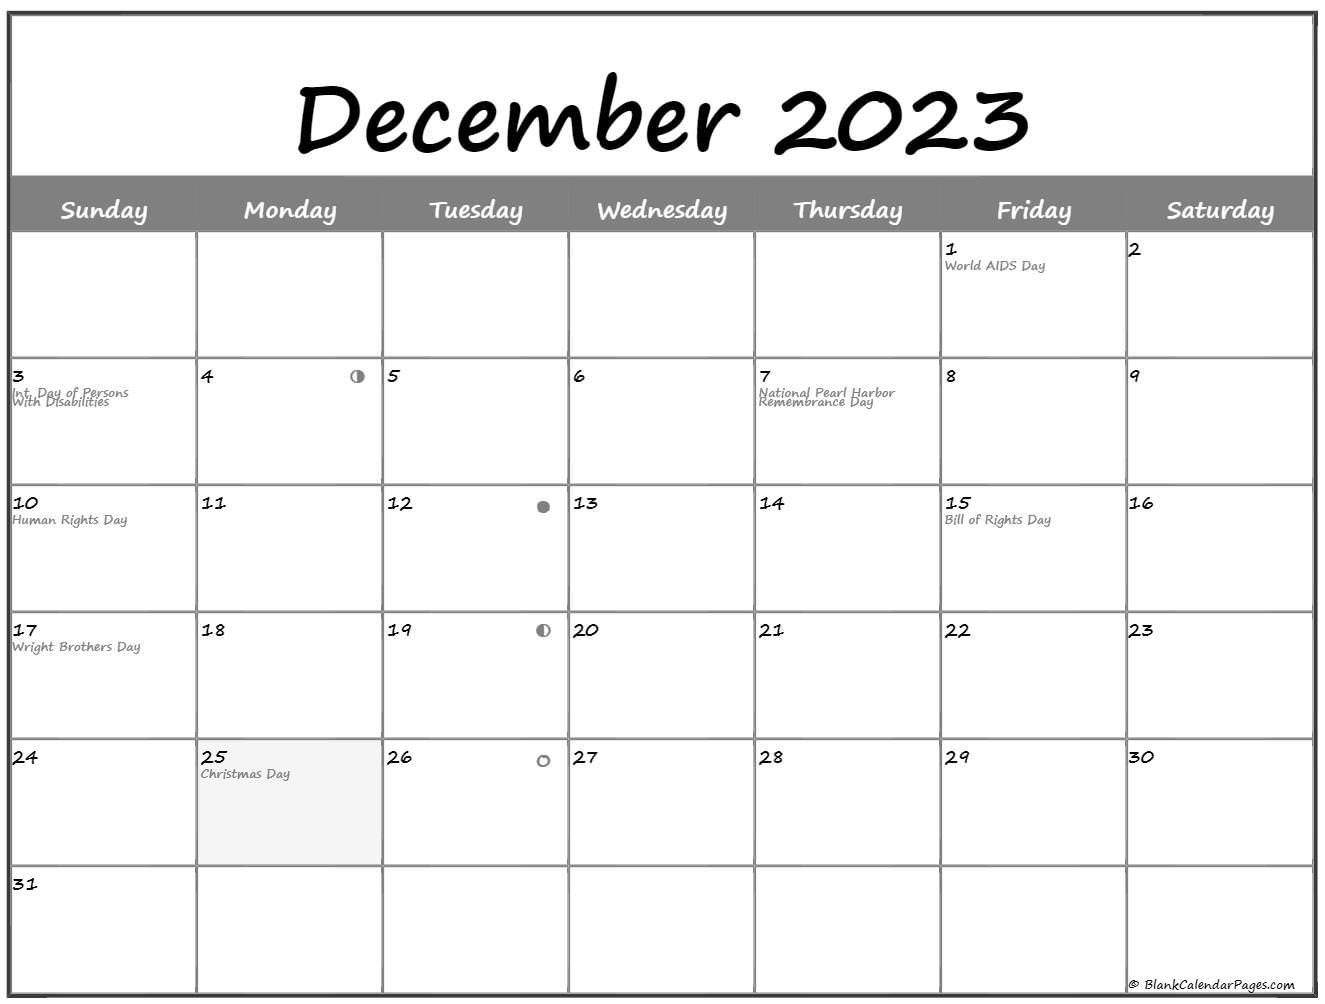 december-2023-lunar-calendar-moon-phase-calendar